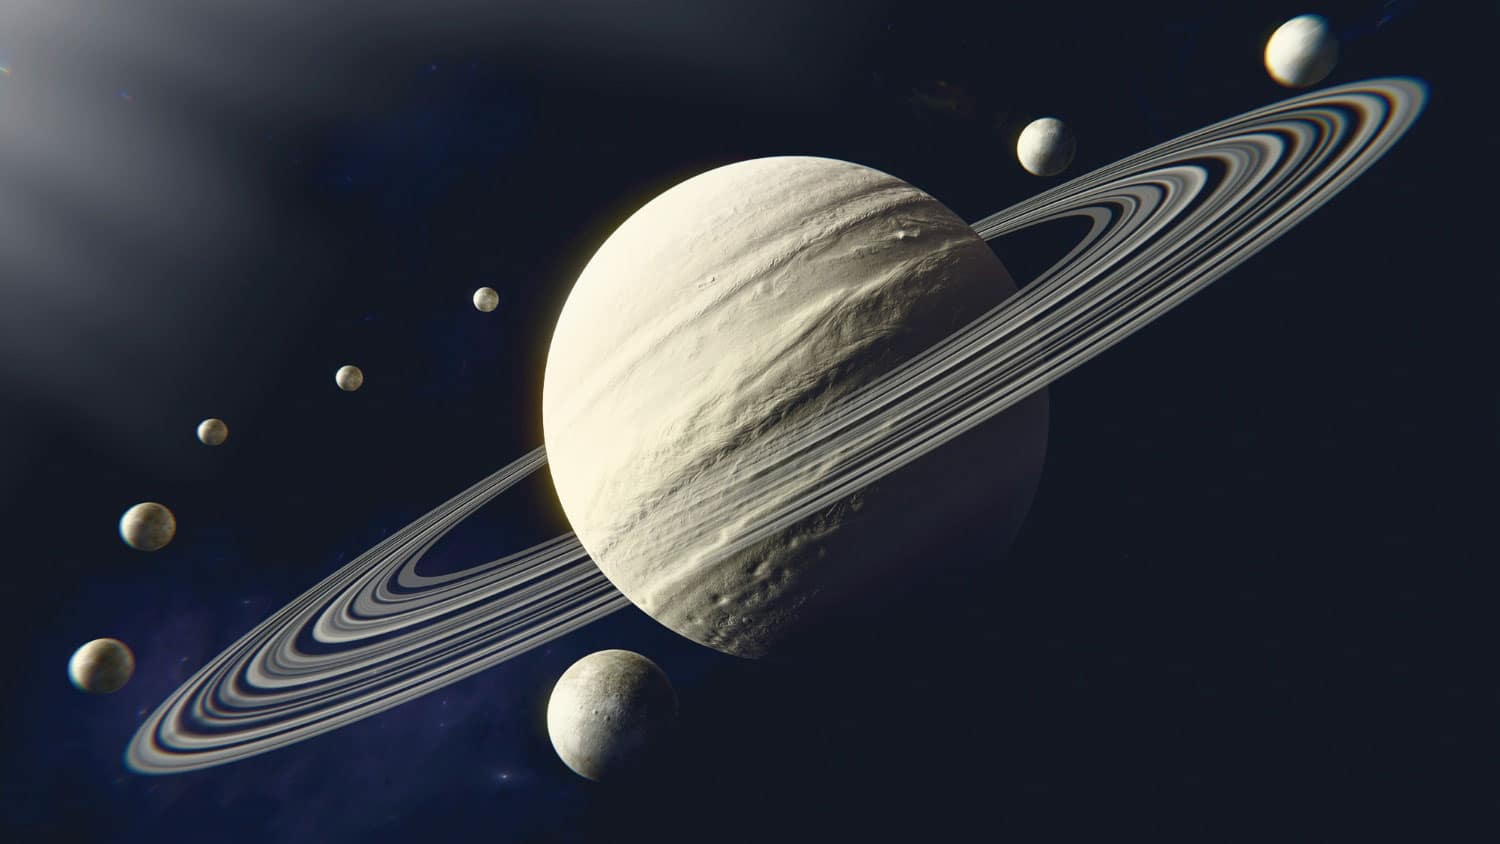 Image illustrating saturn's moons